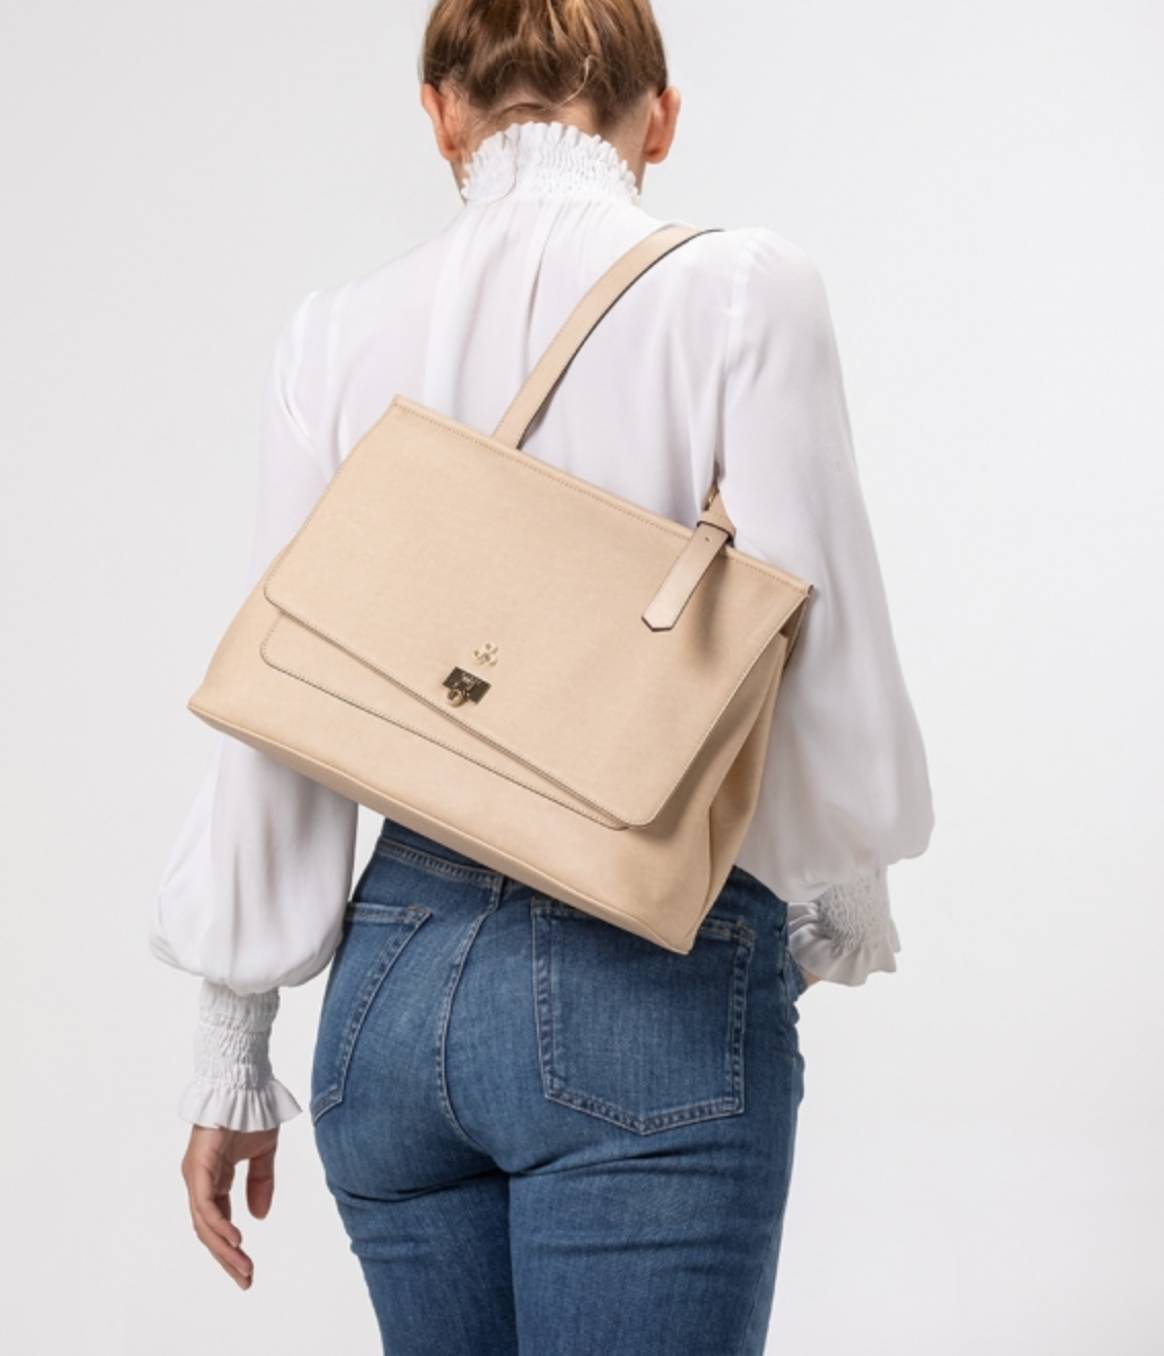 Handbag “Tecla” made out of a corn alternative to leather. Image: Miomojo